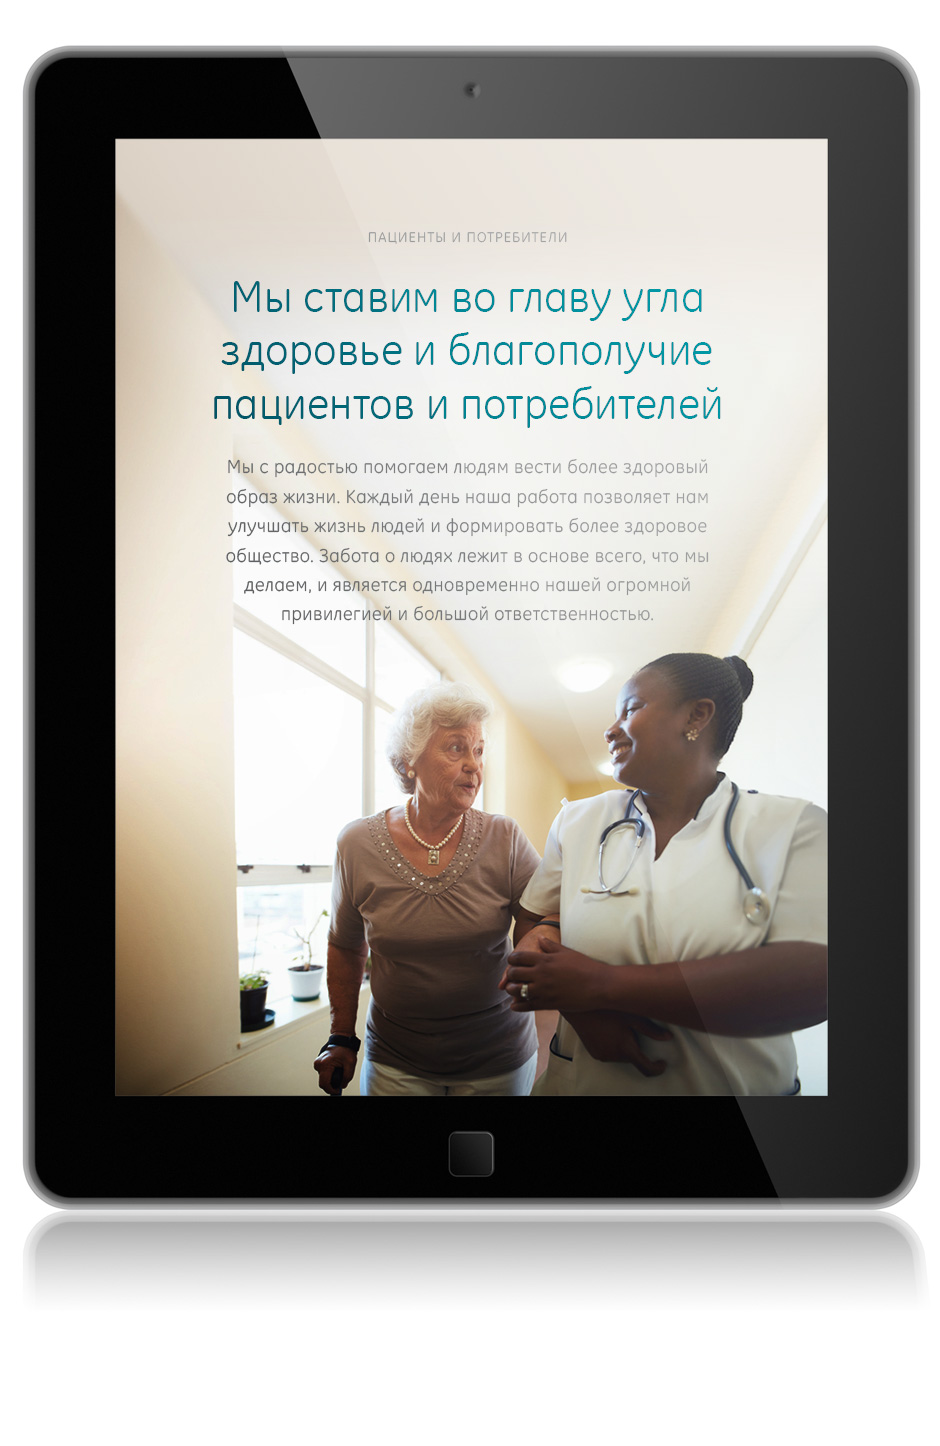 OurWork_Train75k_iPad_Russian.jpg